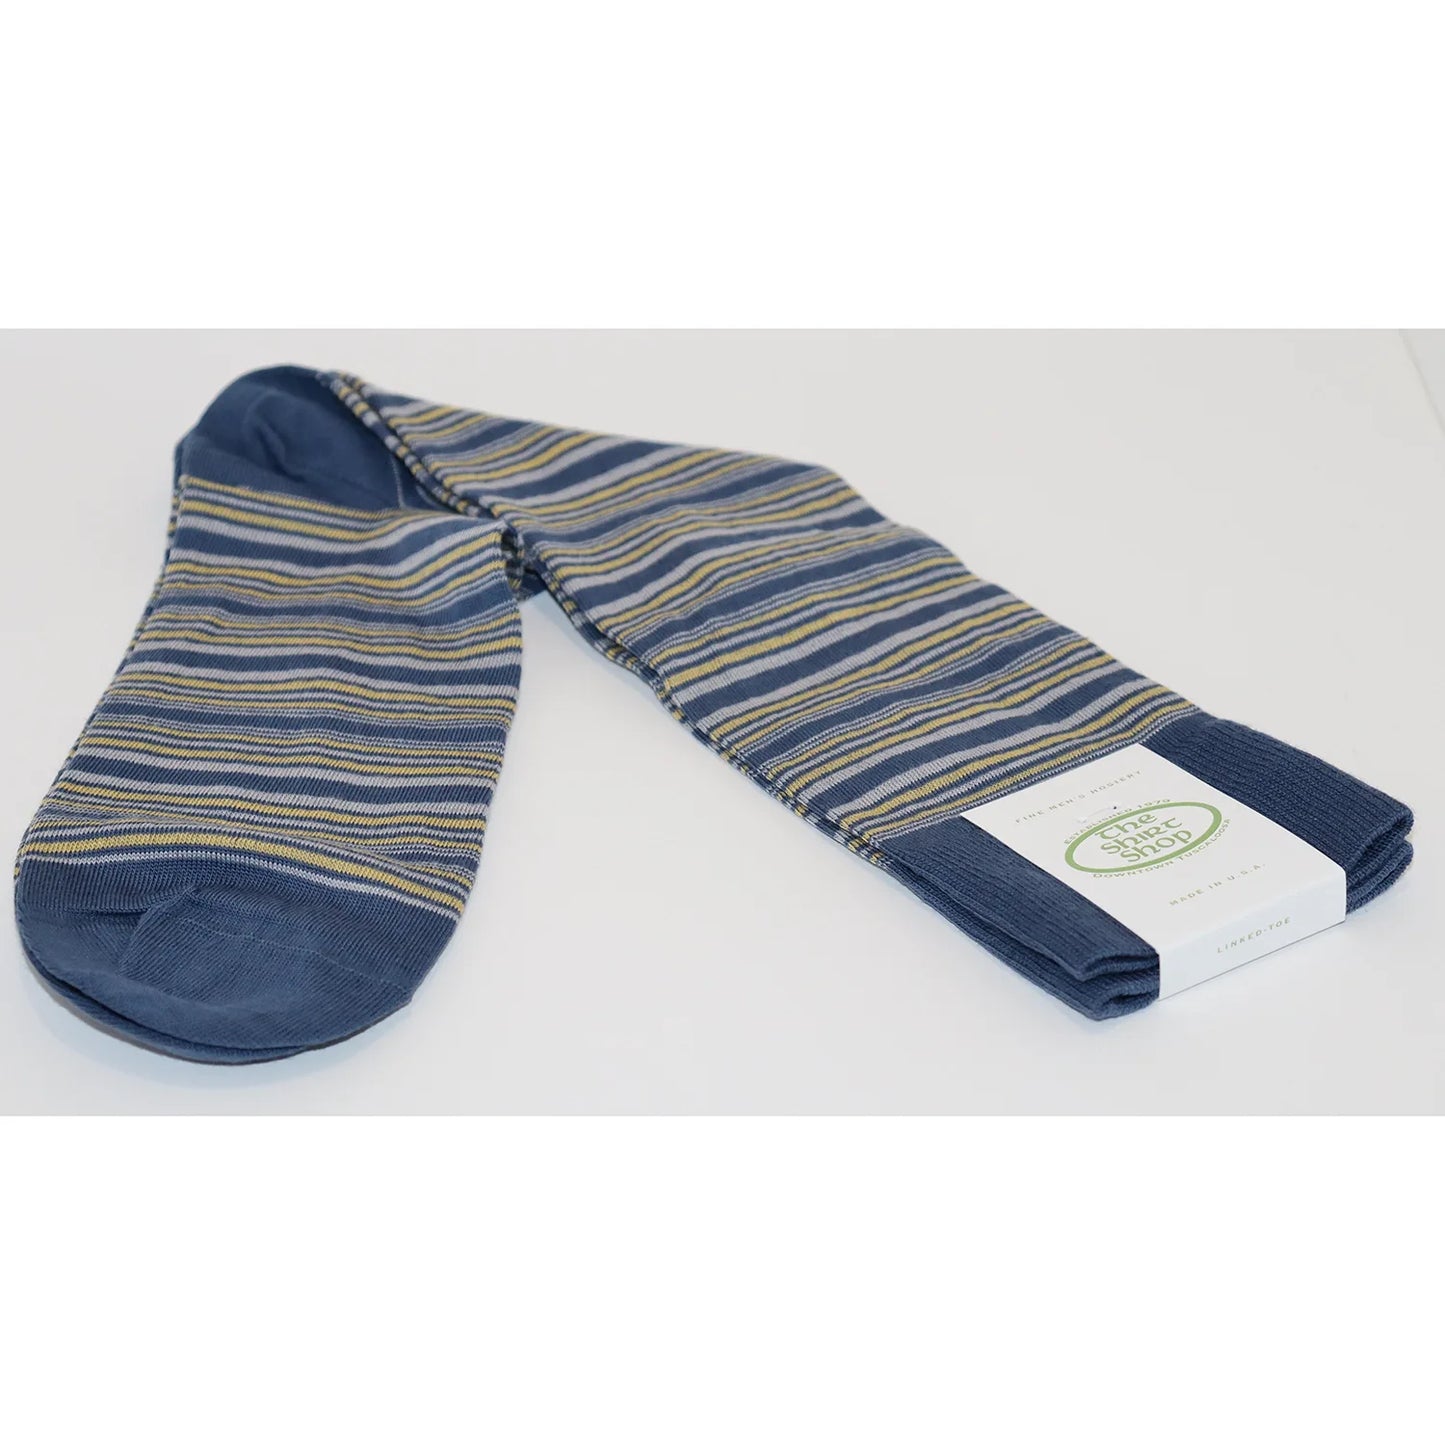 The Shirt Shop Dress Socks - Multi Stripe